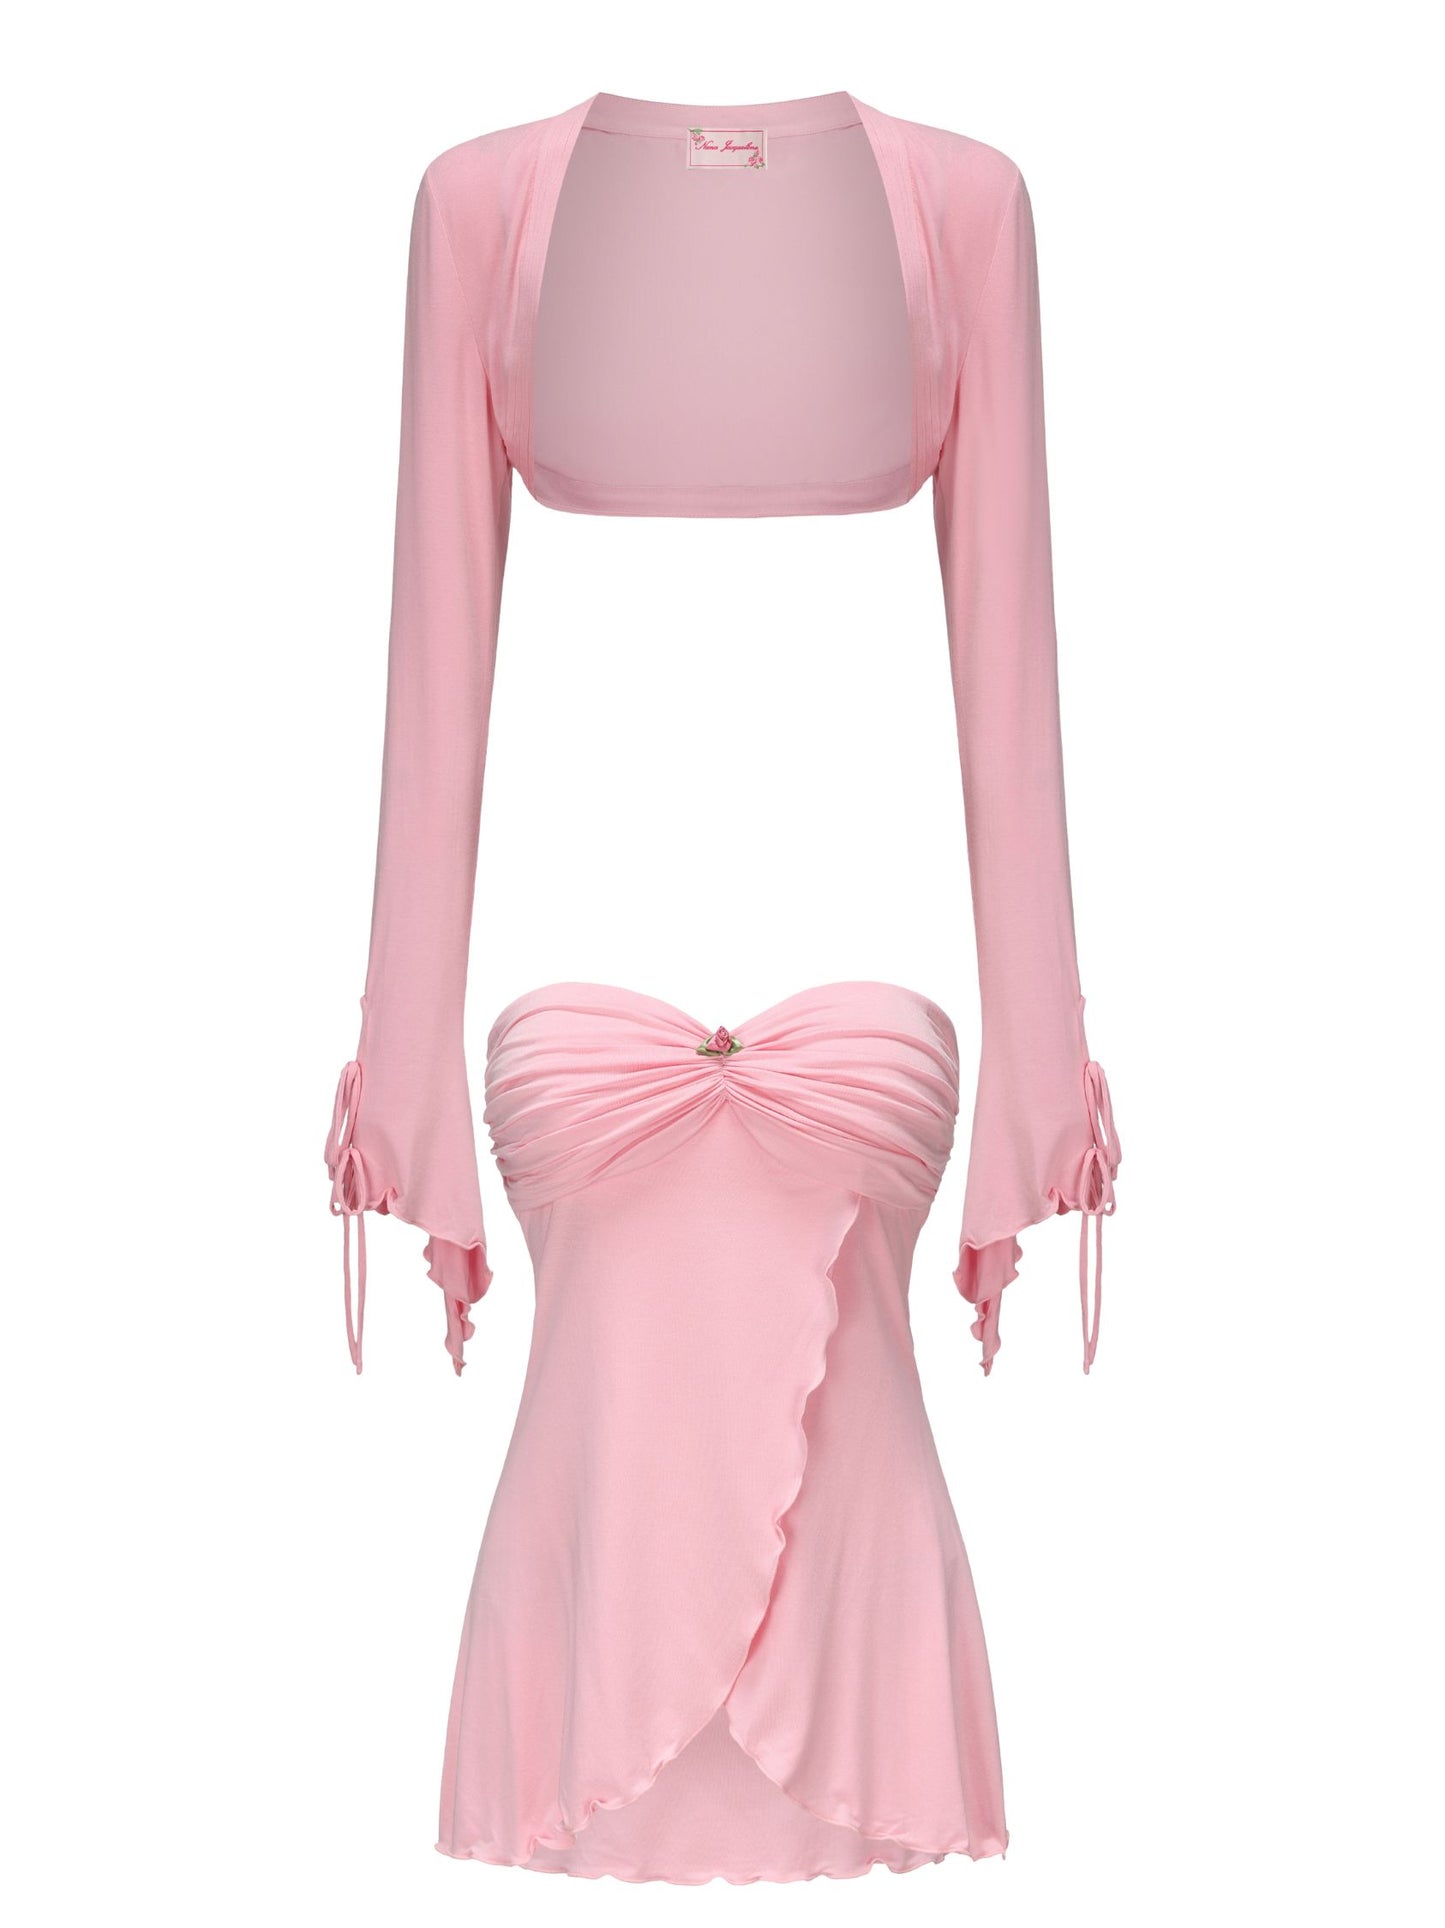 Aubrey Top + Cardigan Set (Pink) (Final Sale)